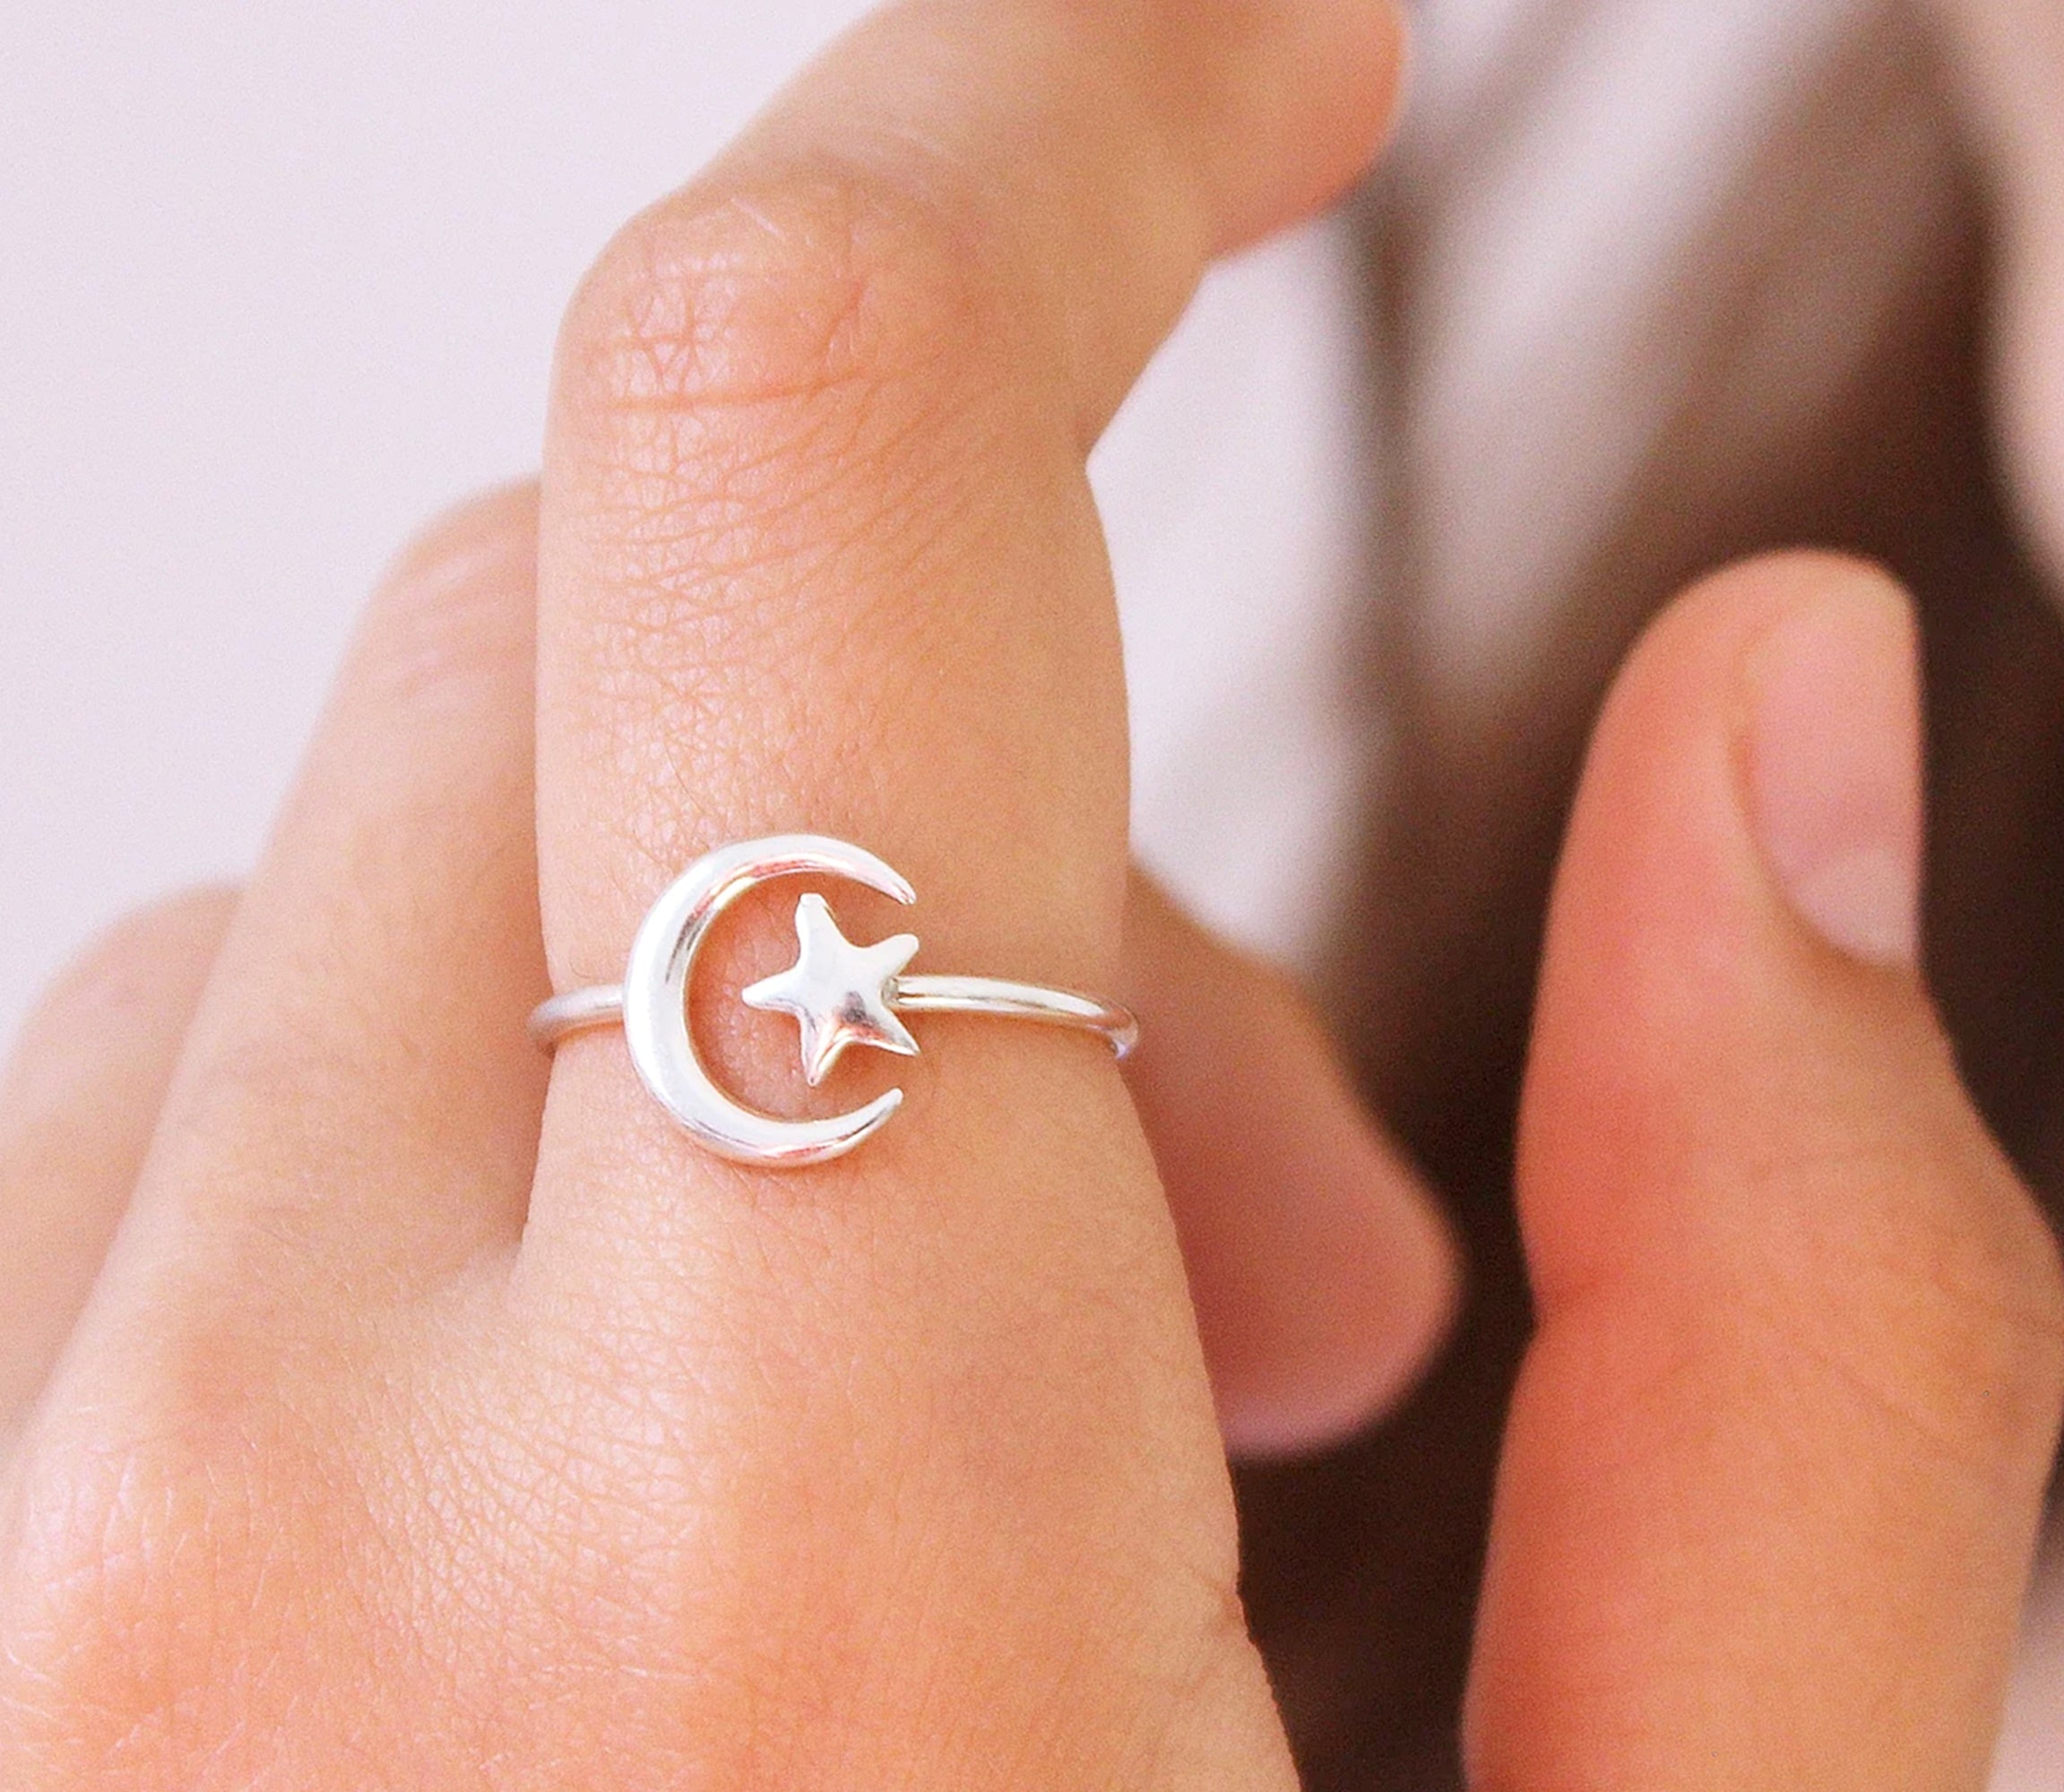 Star & Moon Ring - TinyBox Jewelry